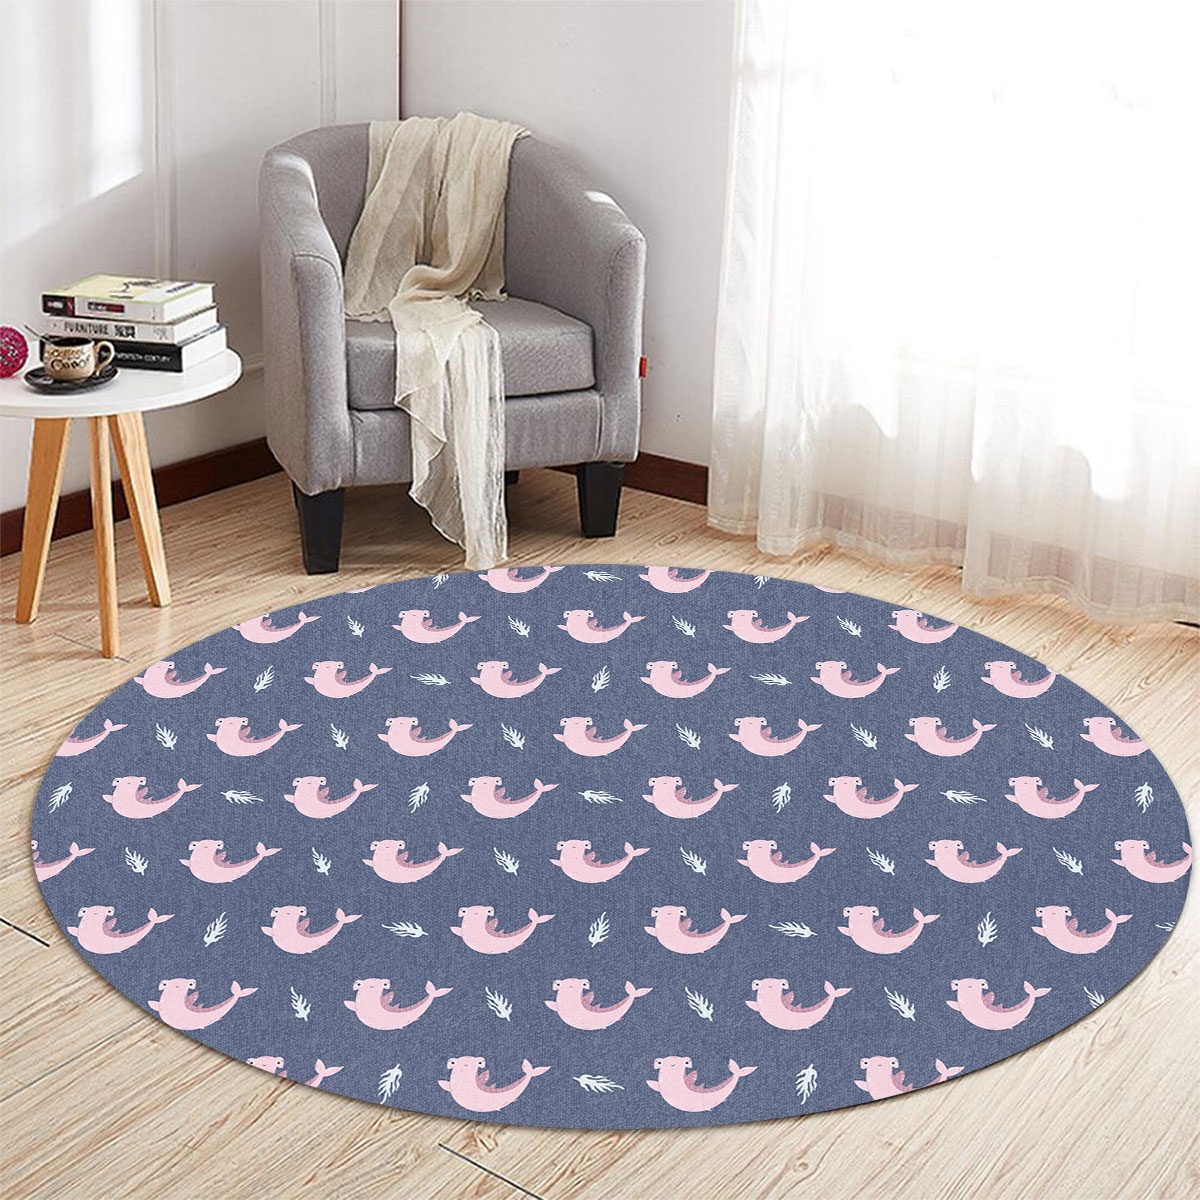 Cute Pink Hammerhead Round Carpet